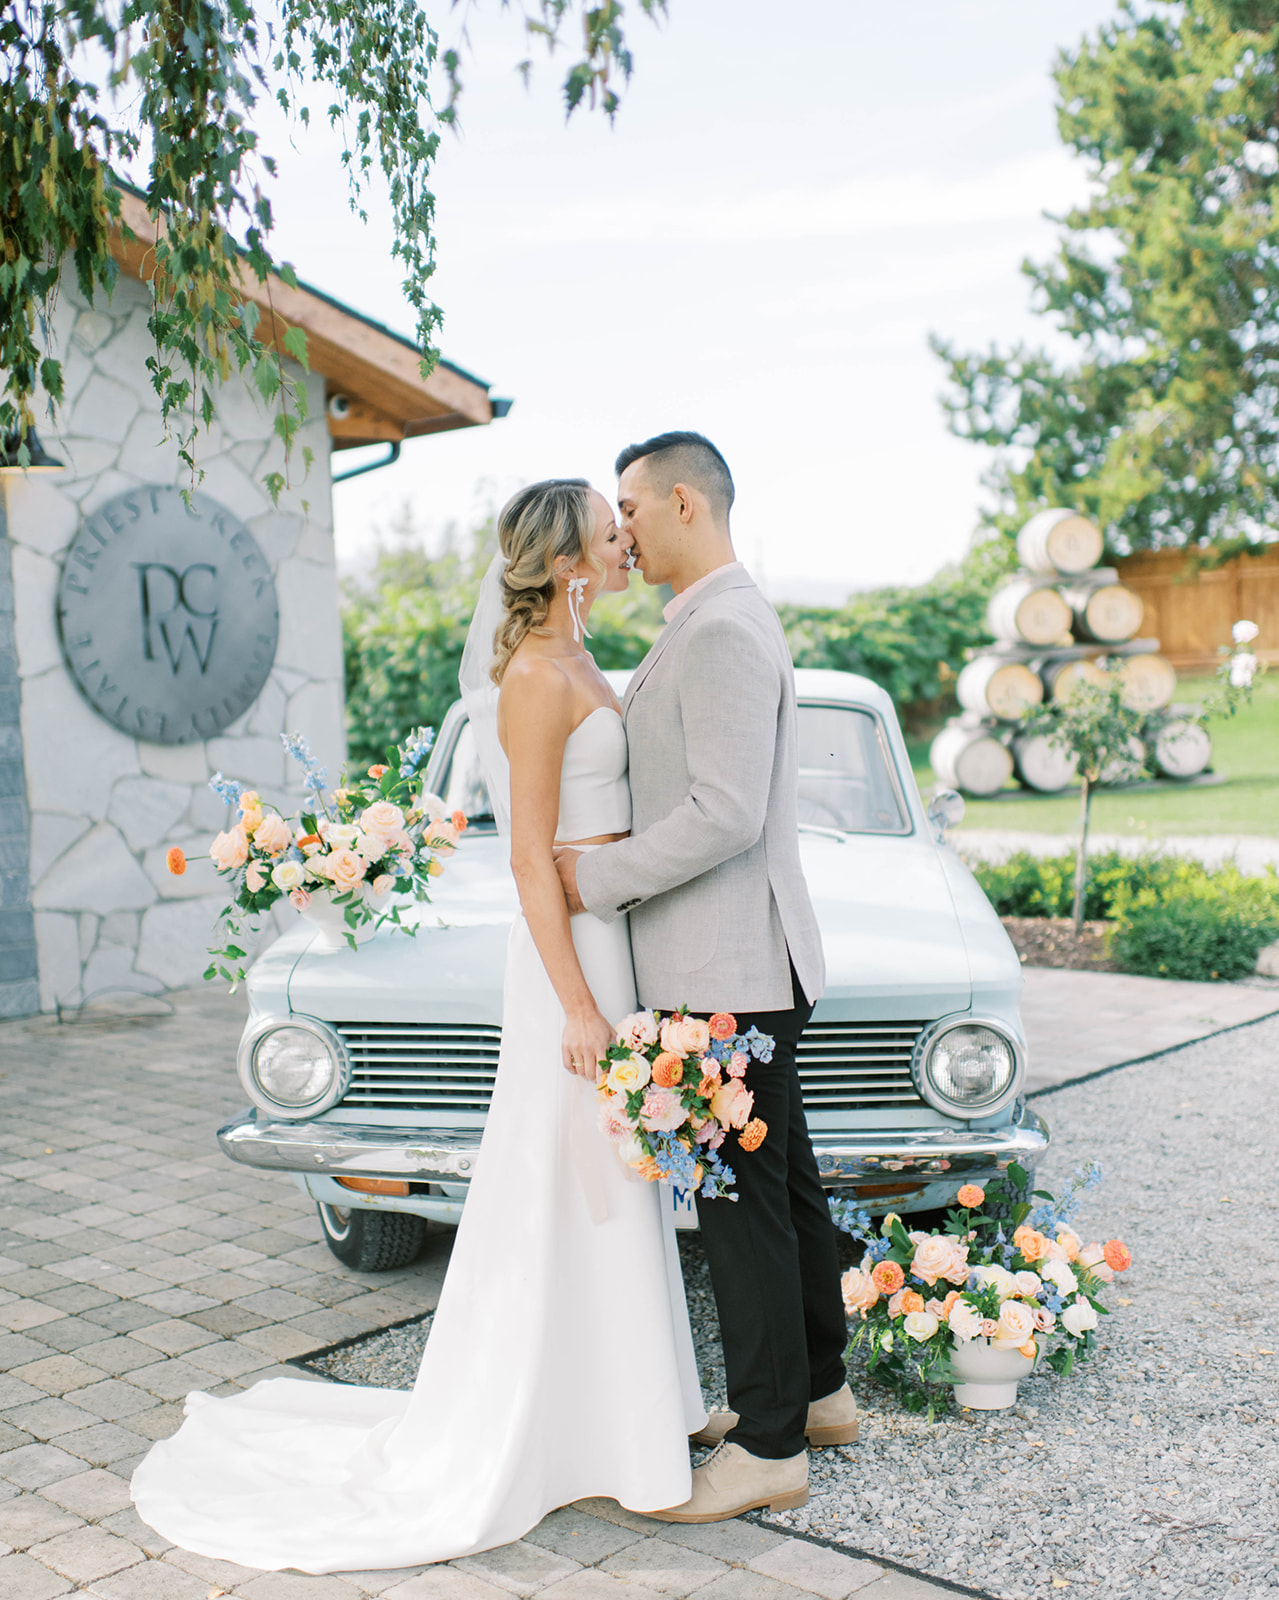 Okanagan winery wedding venue inspiration, Kelowna Wedding Photographer, bride and groom portrait with bride holding summer bouquet of orange, pink and blue florals